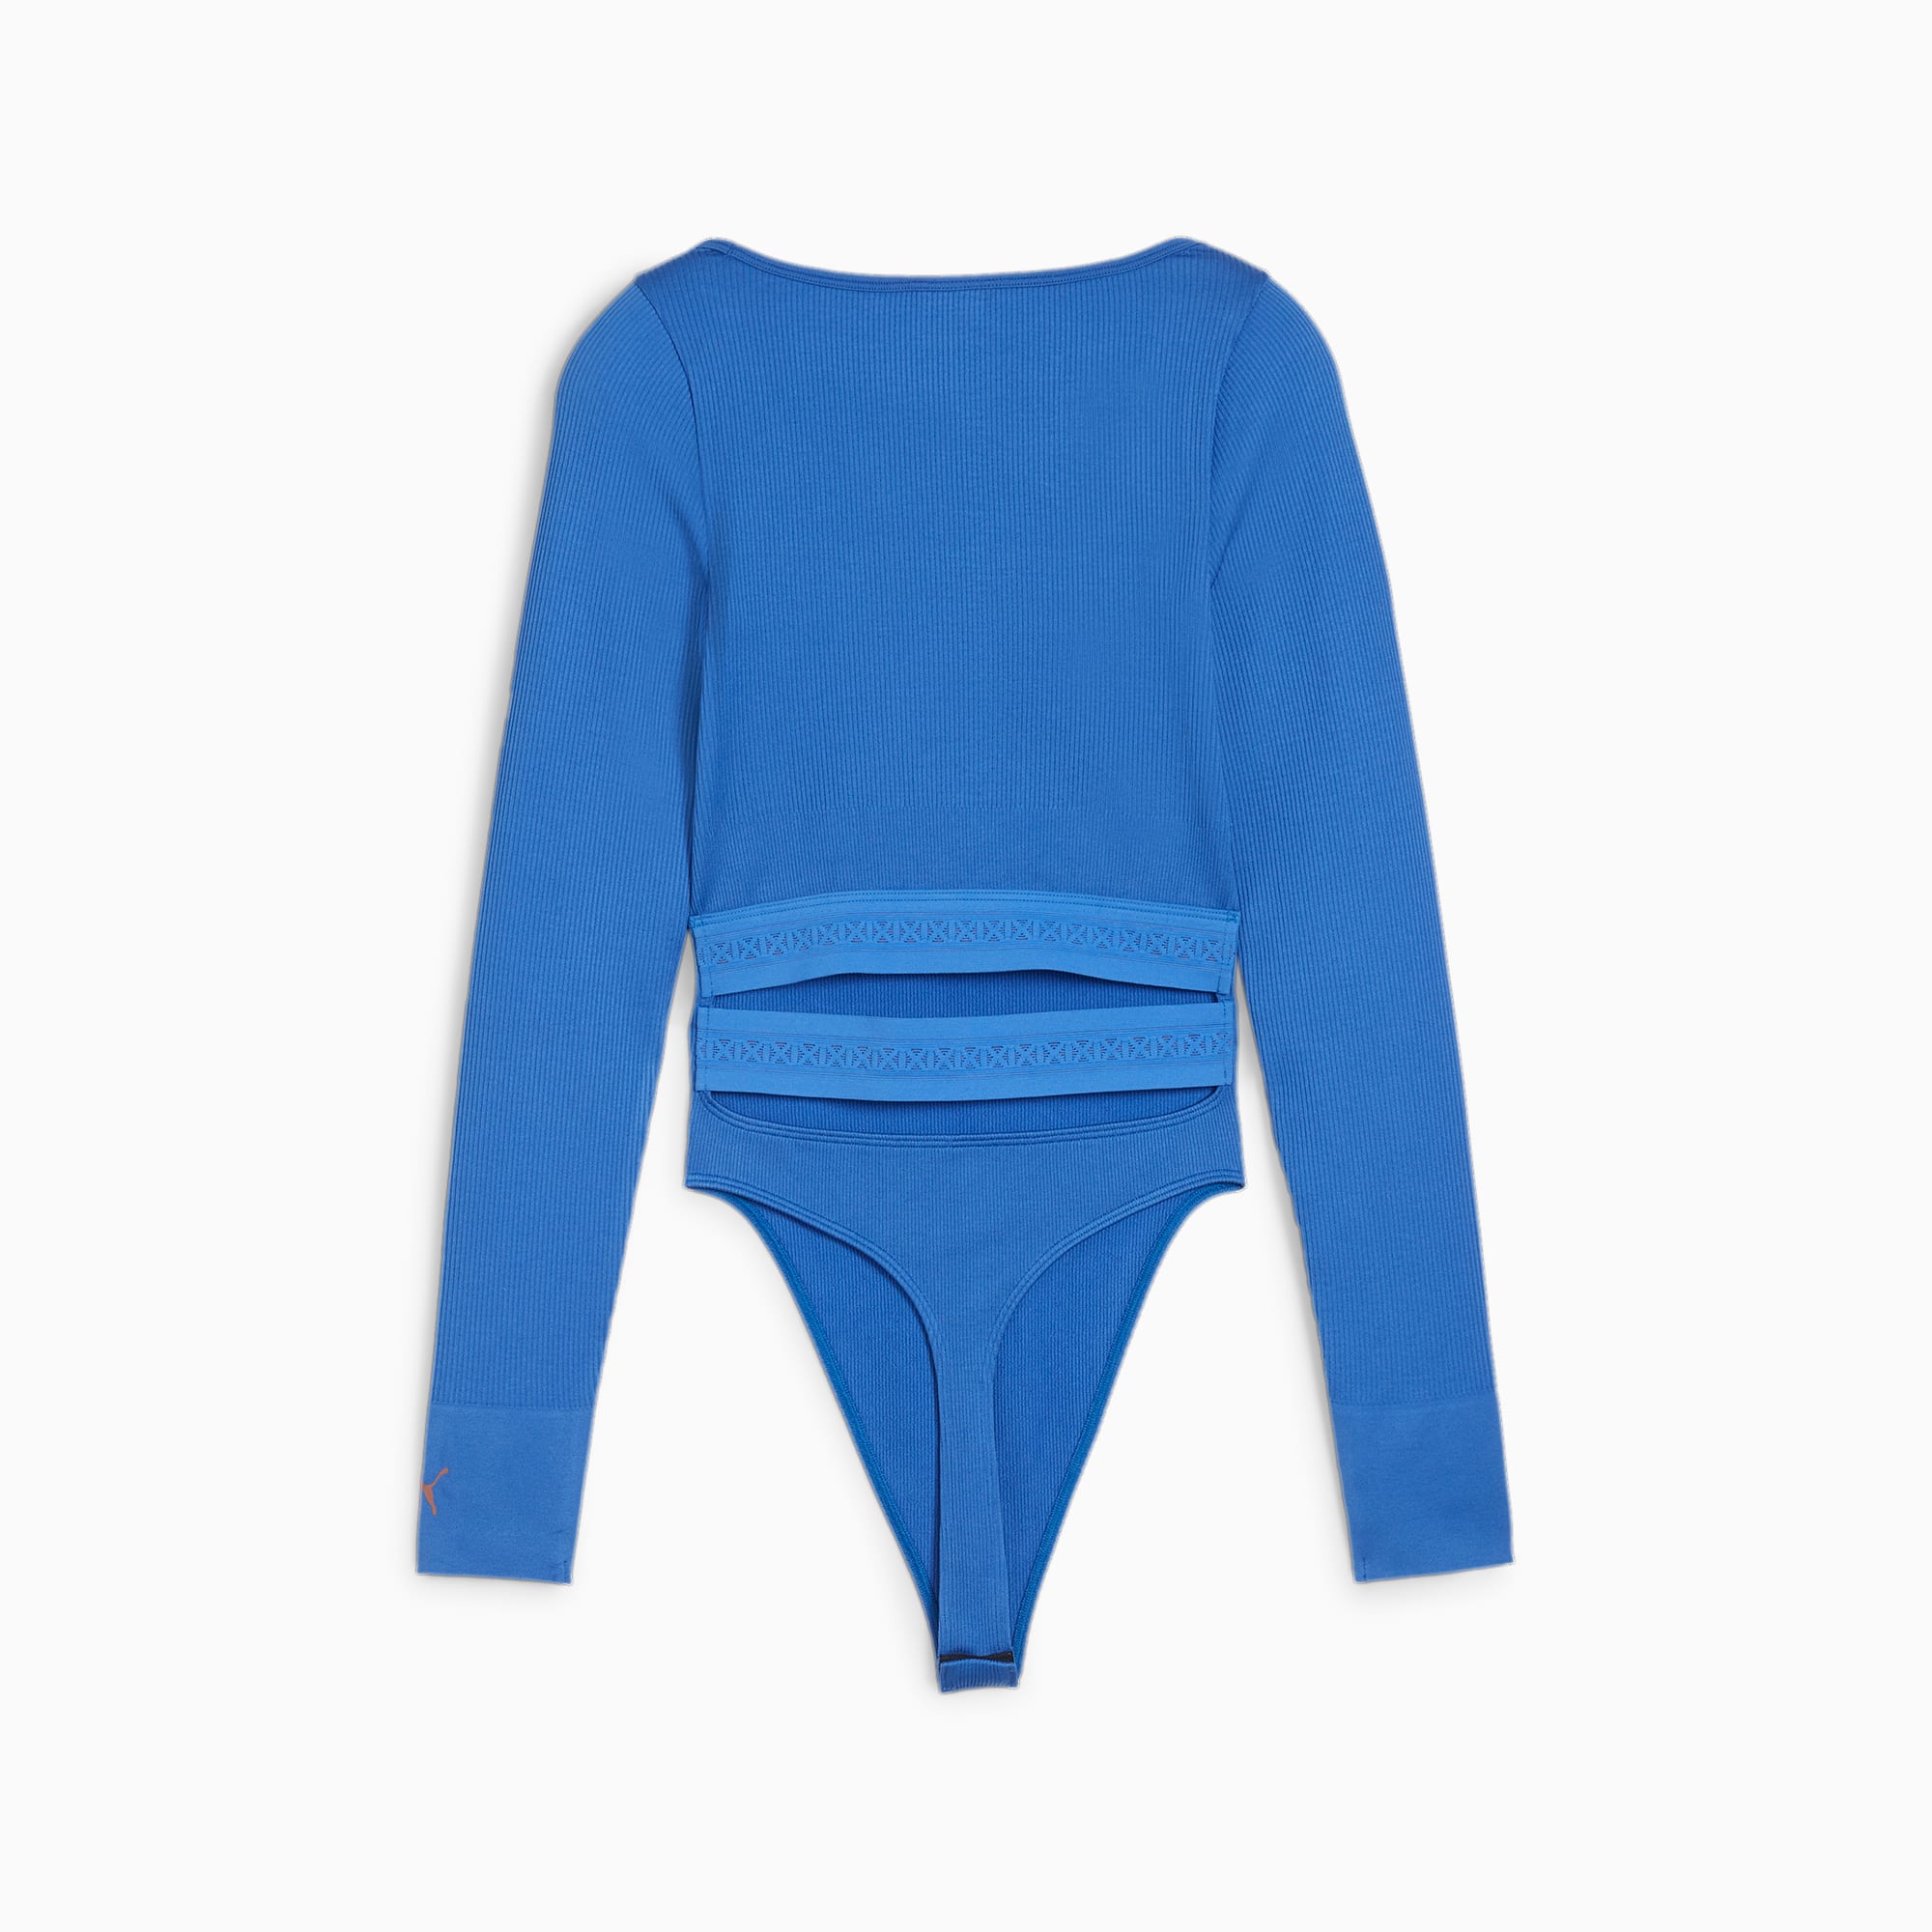 PUMA X Pamela Reif Women's Ribbed Bodysuit, Bluevender, Size L, Clothing